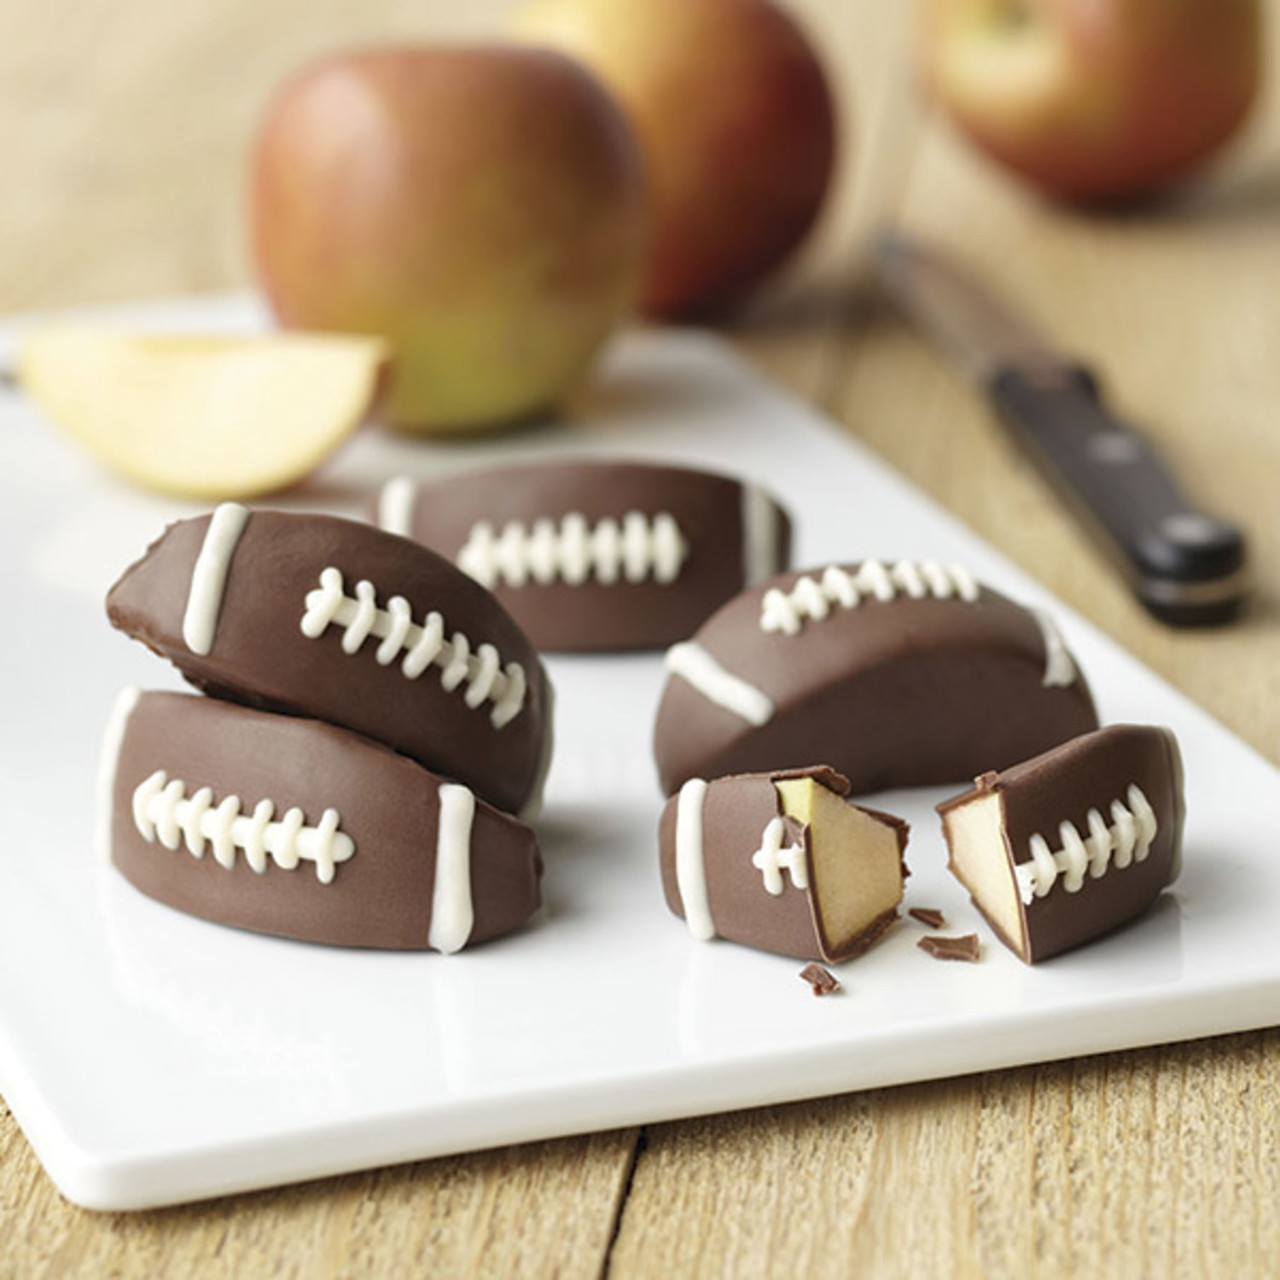 Chocolate Covered Apple Footballs